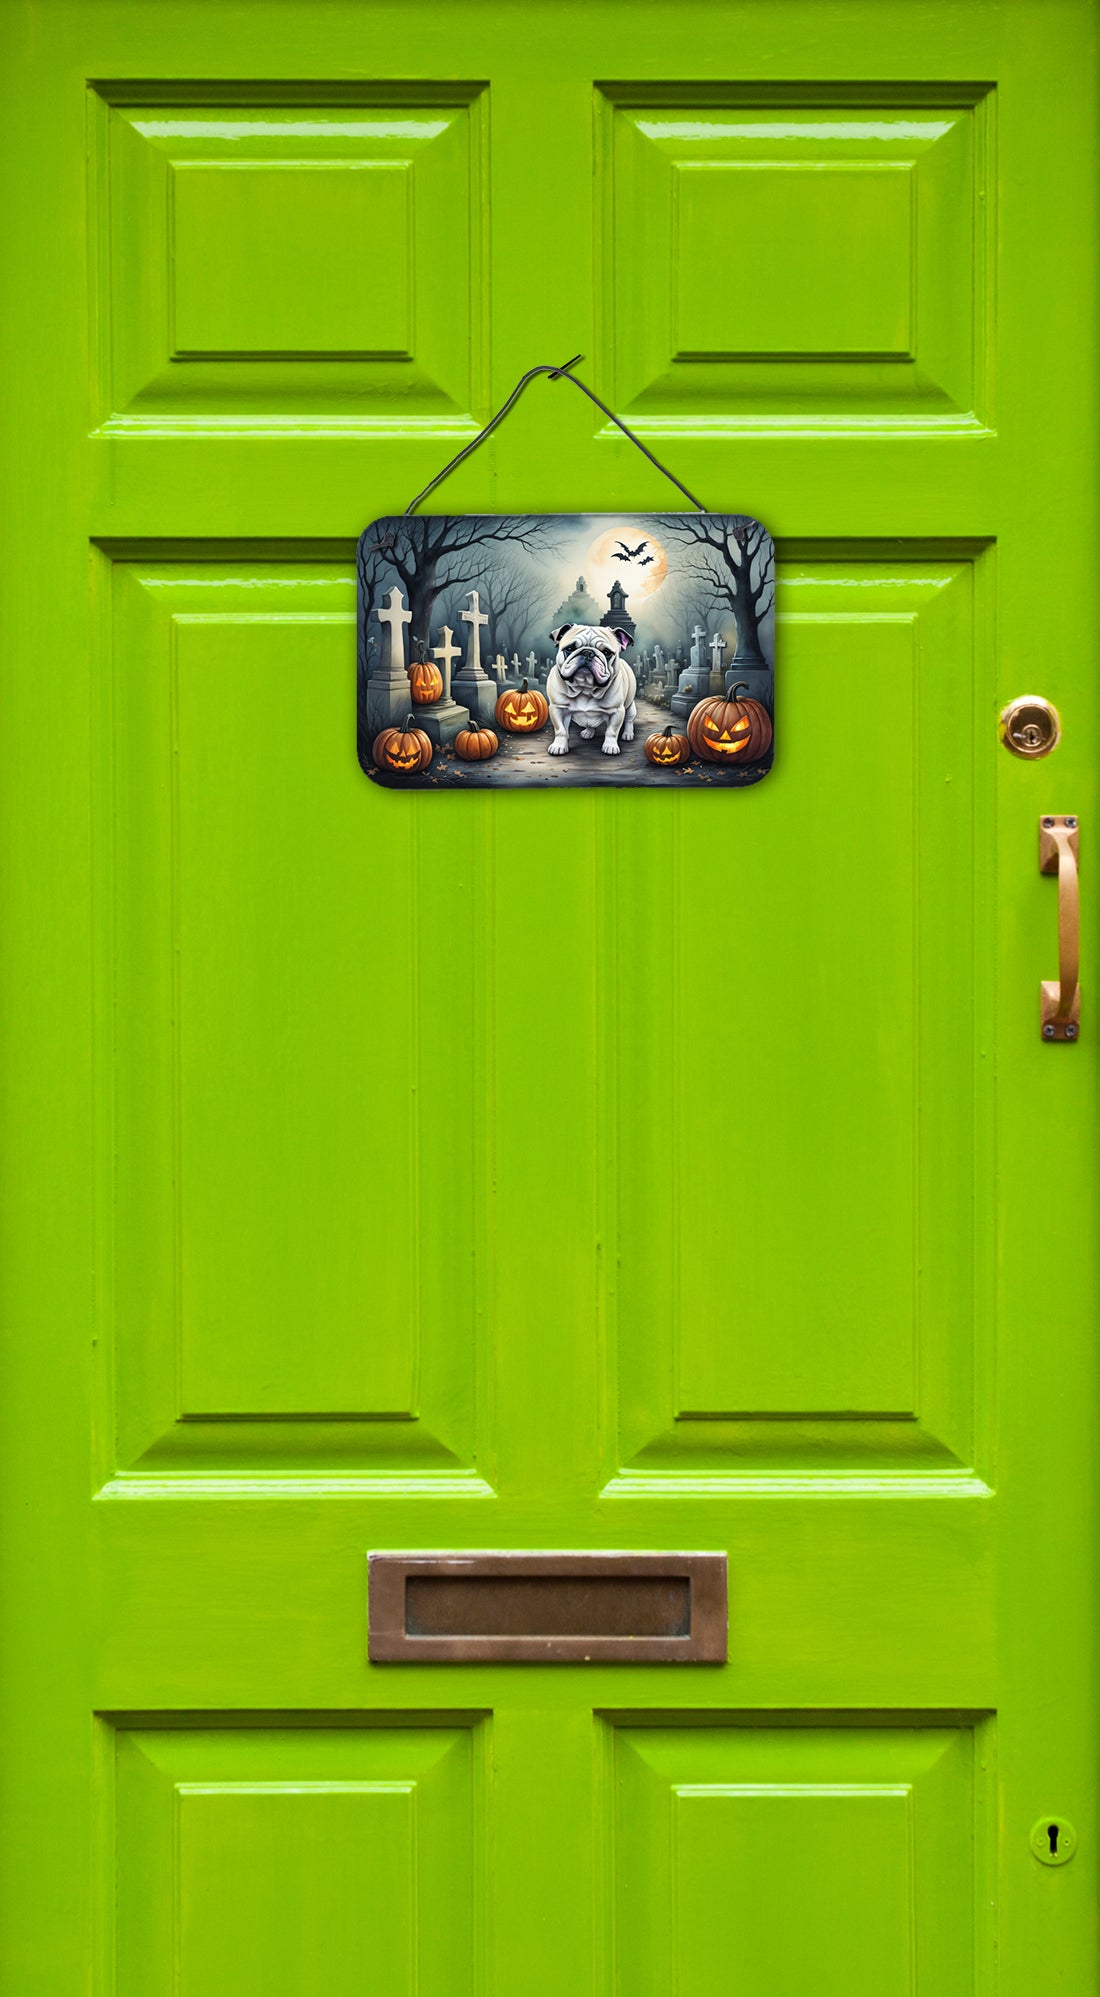 Buy this English Bulldog Spooky Halloween Wall or Door Hanging Prints